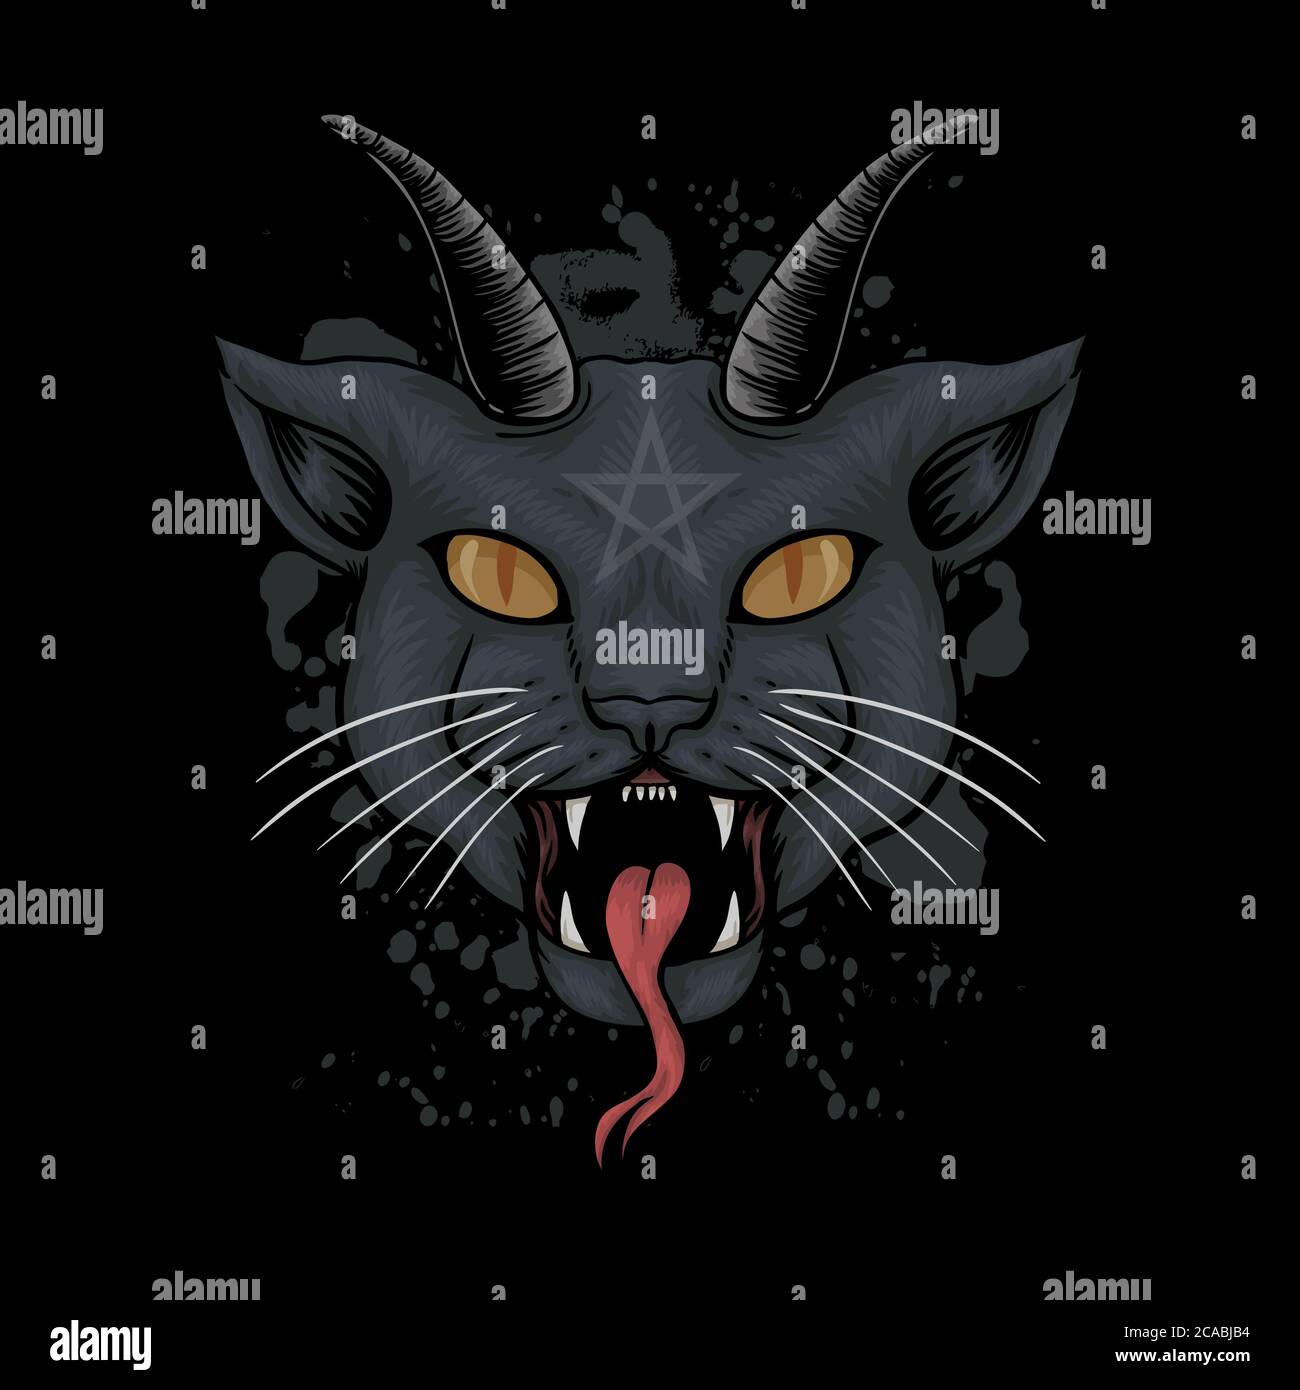 Chat satanic 11 Satanic